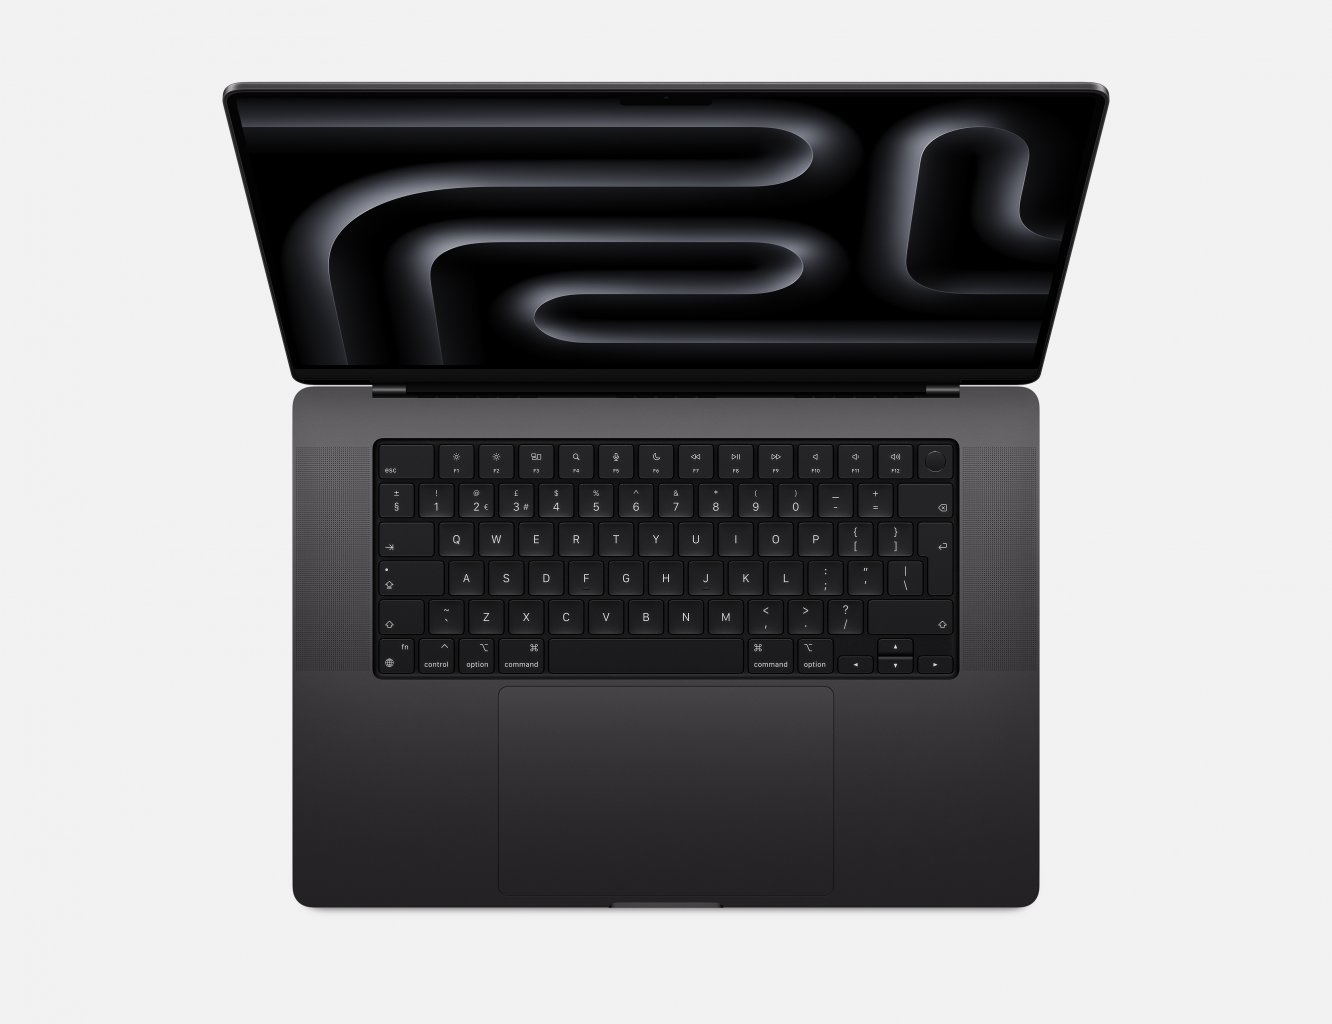 Photo 2 of MacBook Pro in Space Black